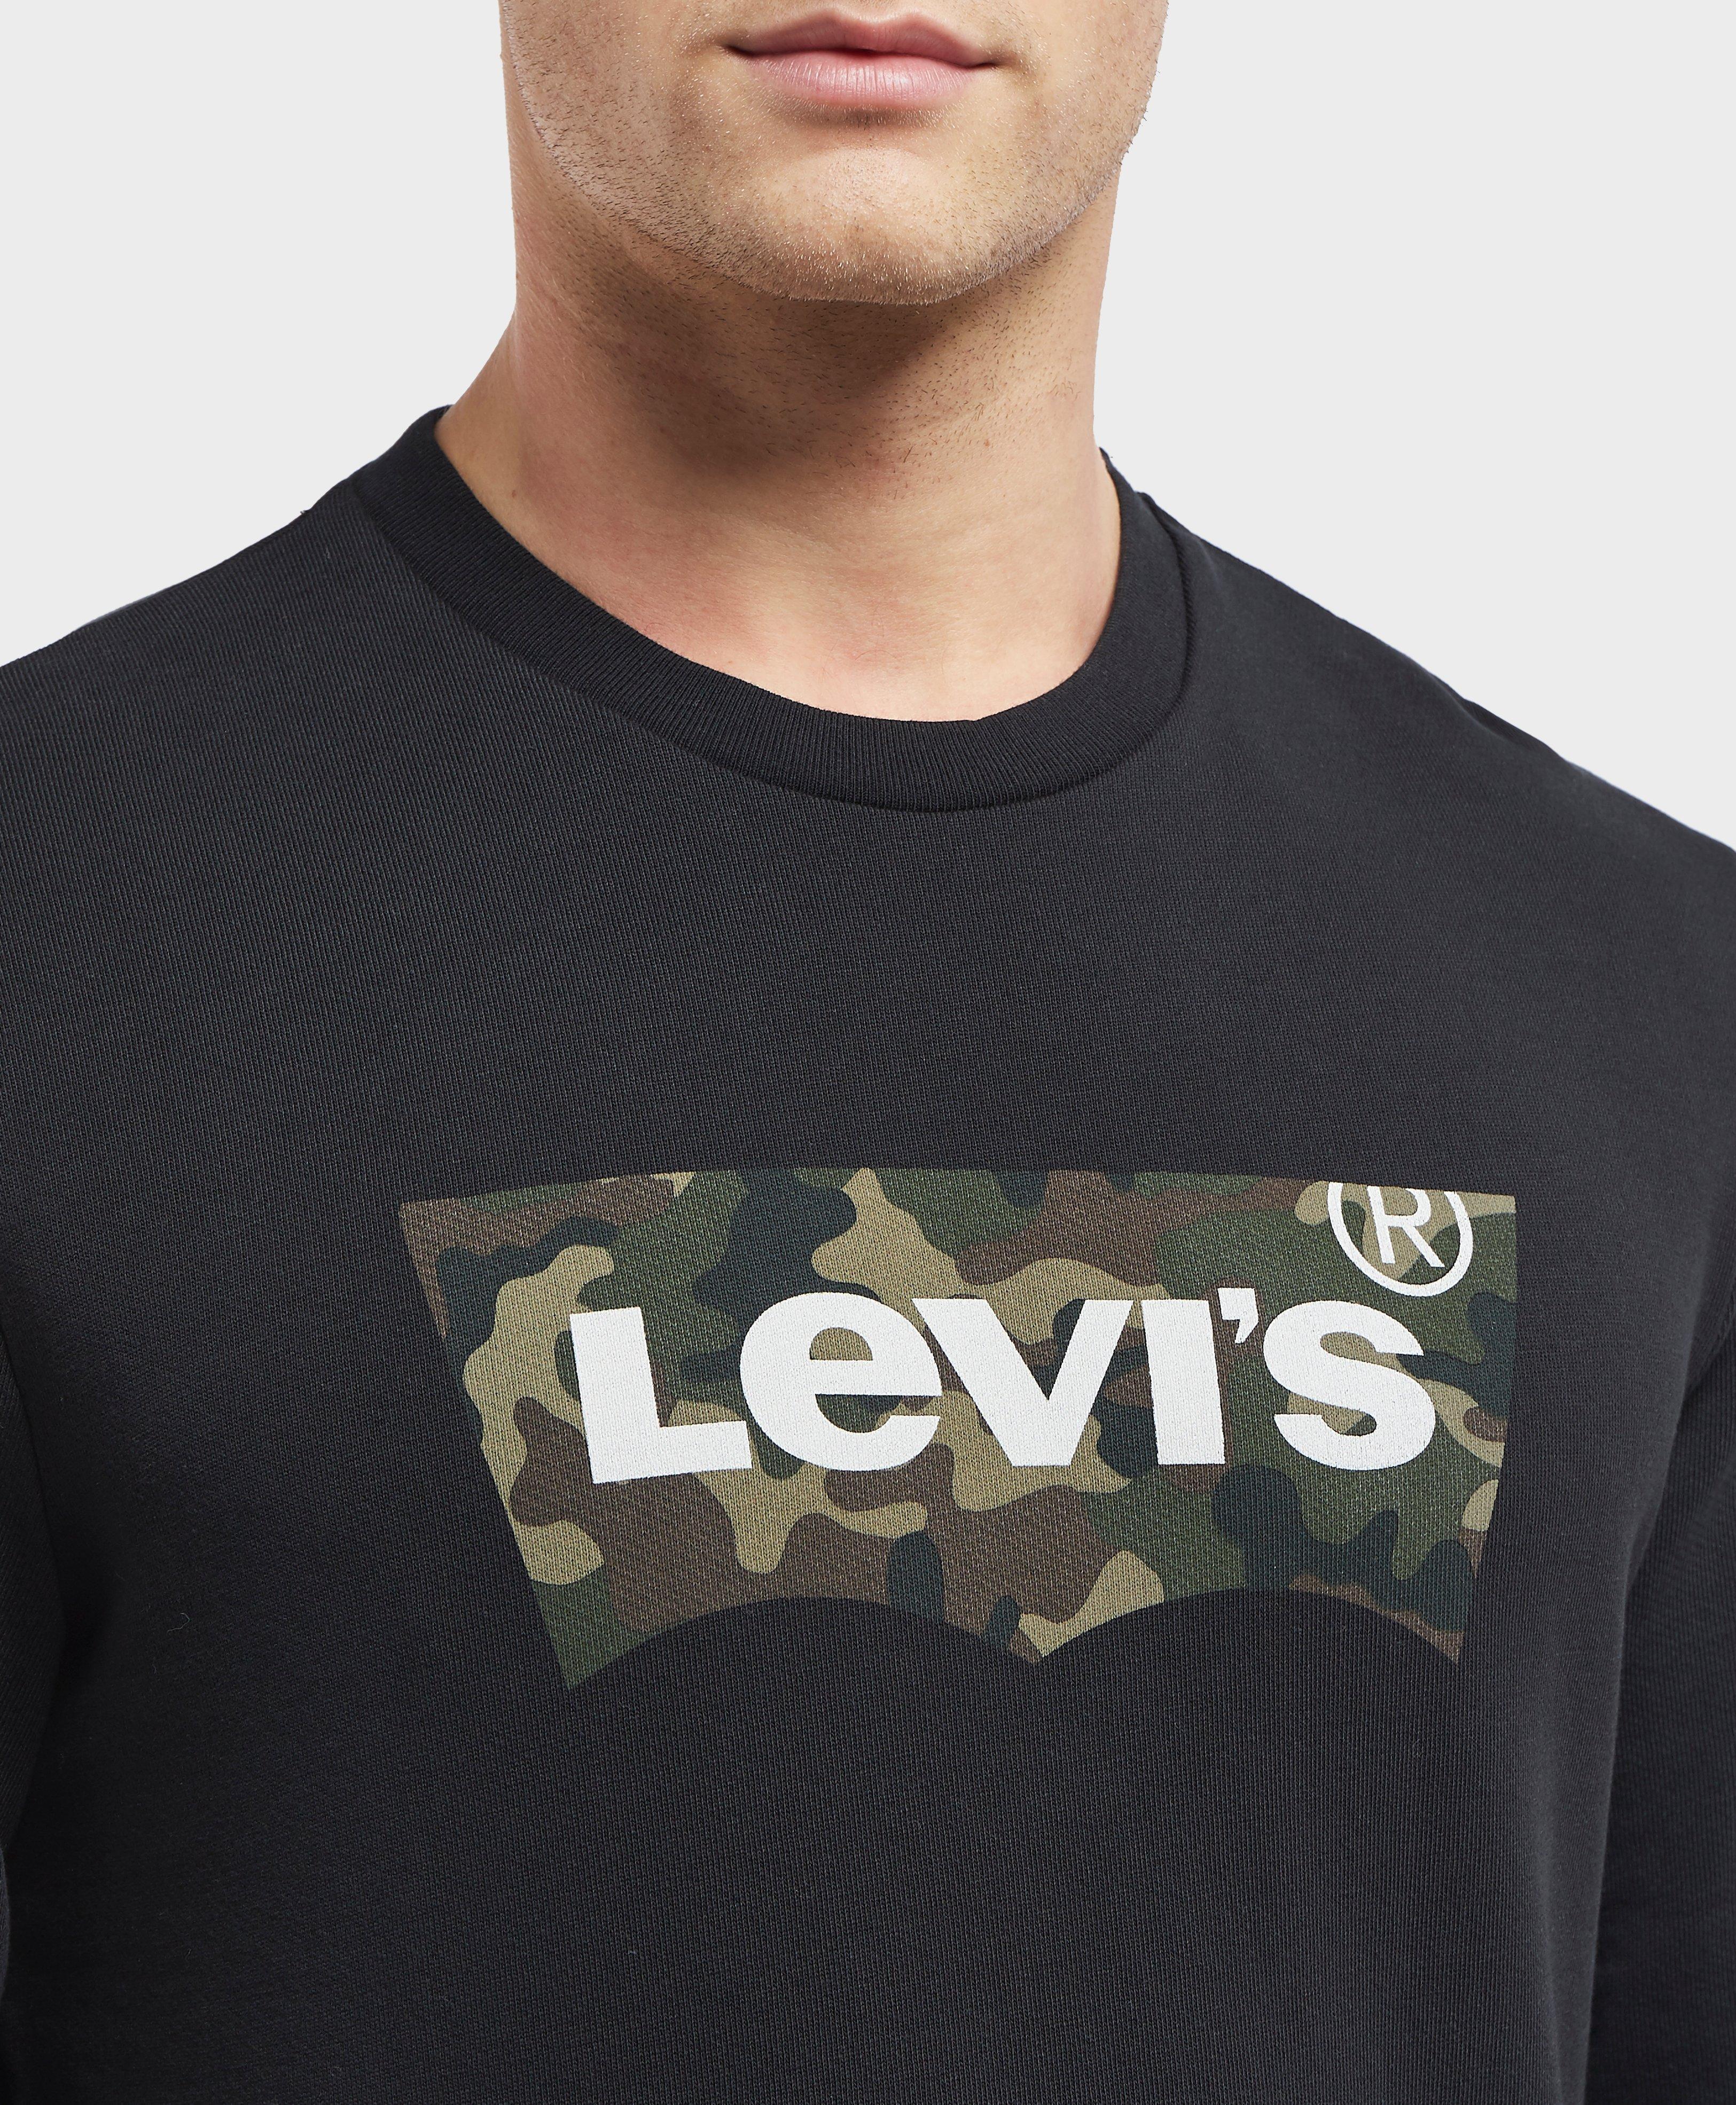 Levi's Cotton Camo Batwing Logo Sweatshirt - Online Exclusive for Men - Lyst